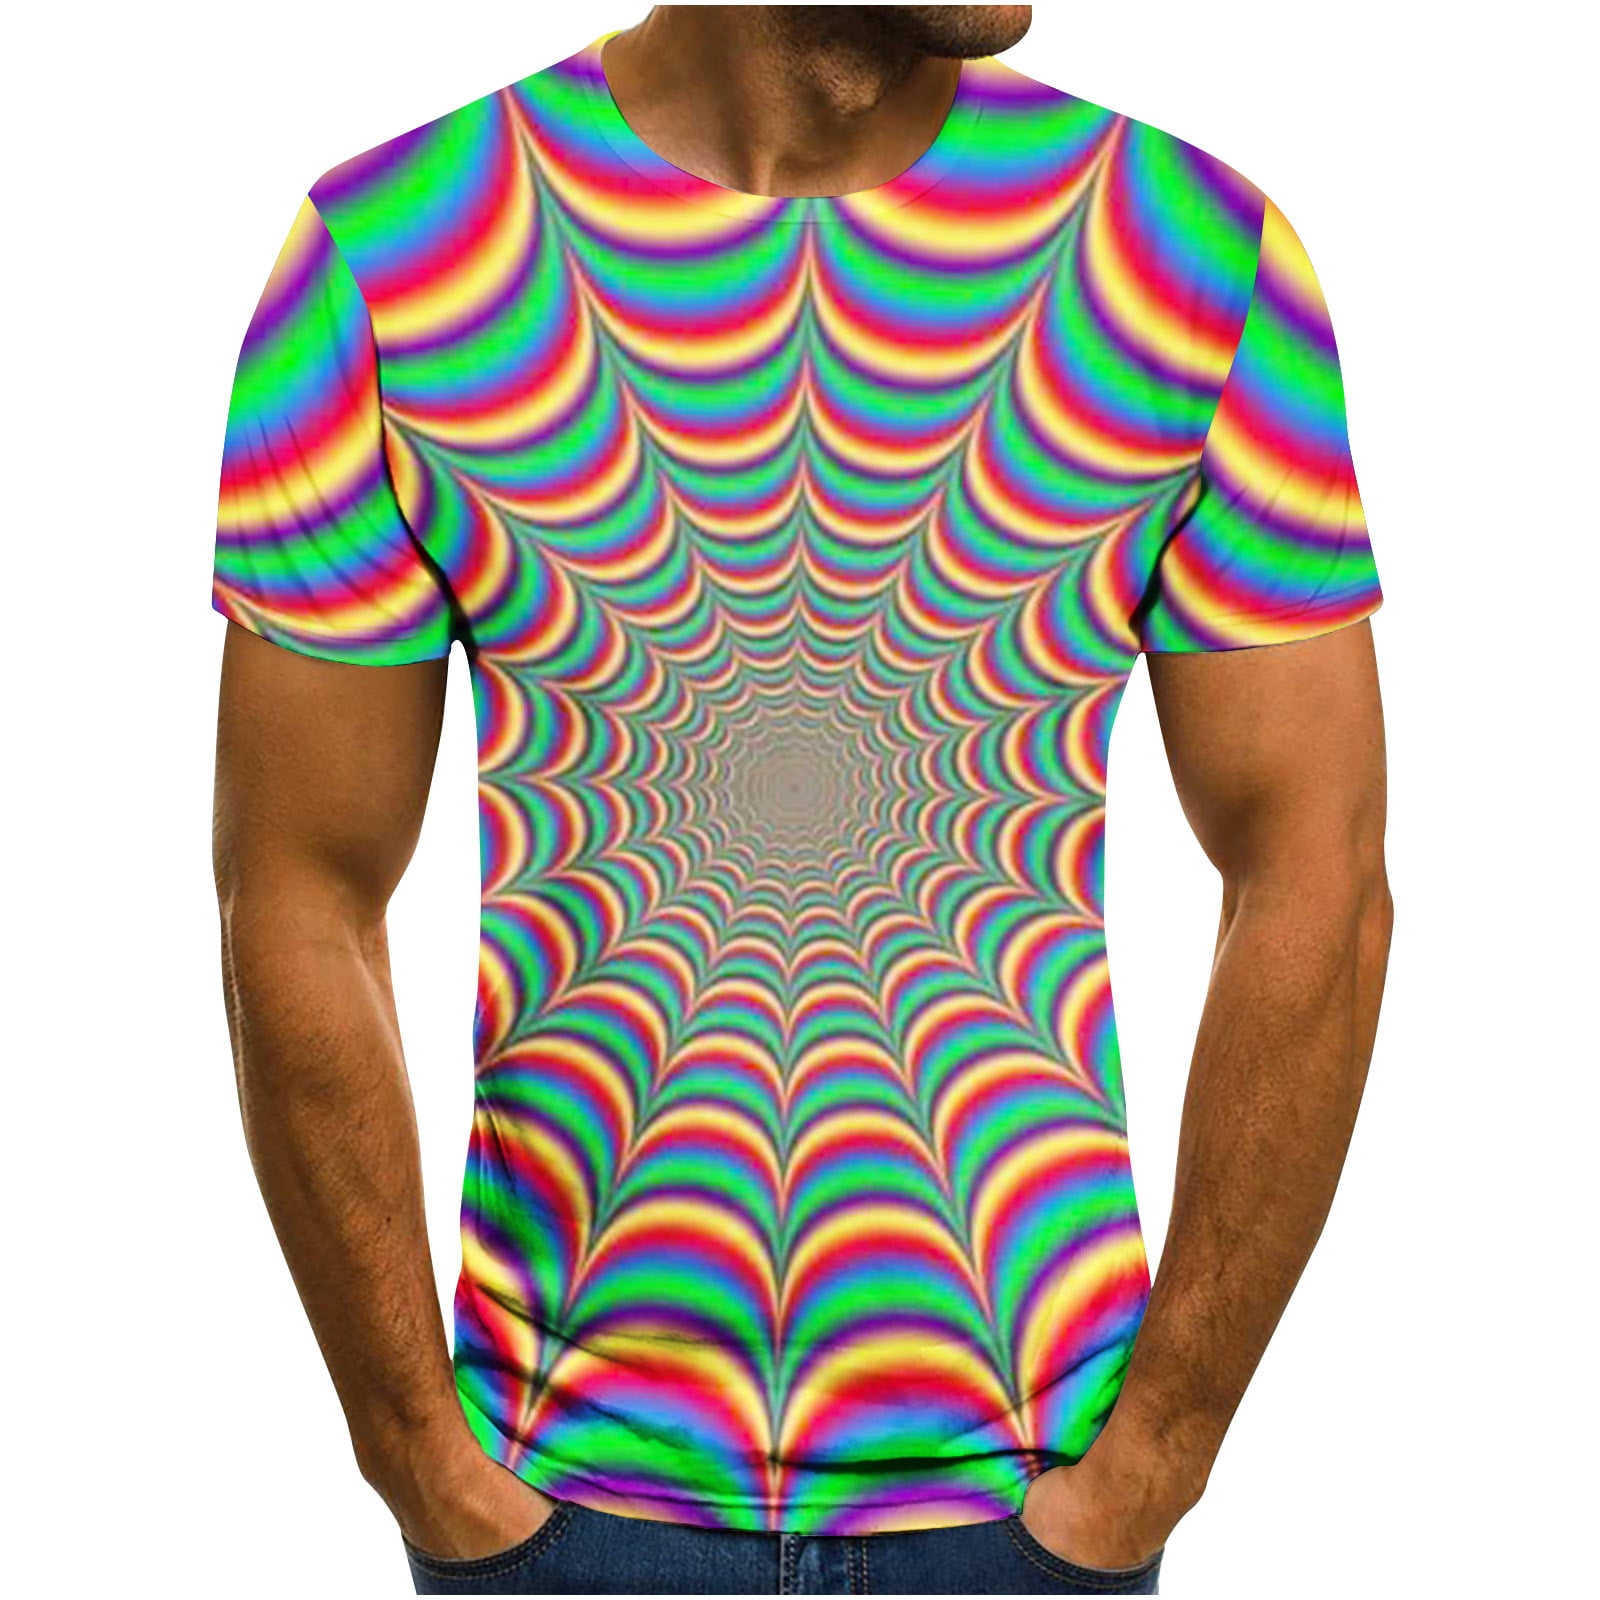 Simplmasygenix Clearance Shirts Tops Men's T-shirt 3D Unrelocated